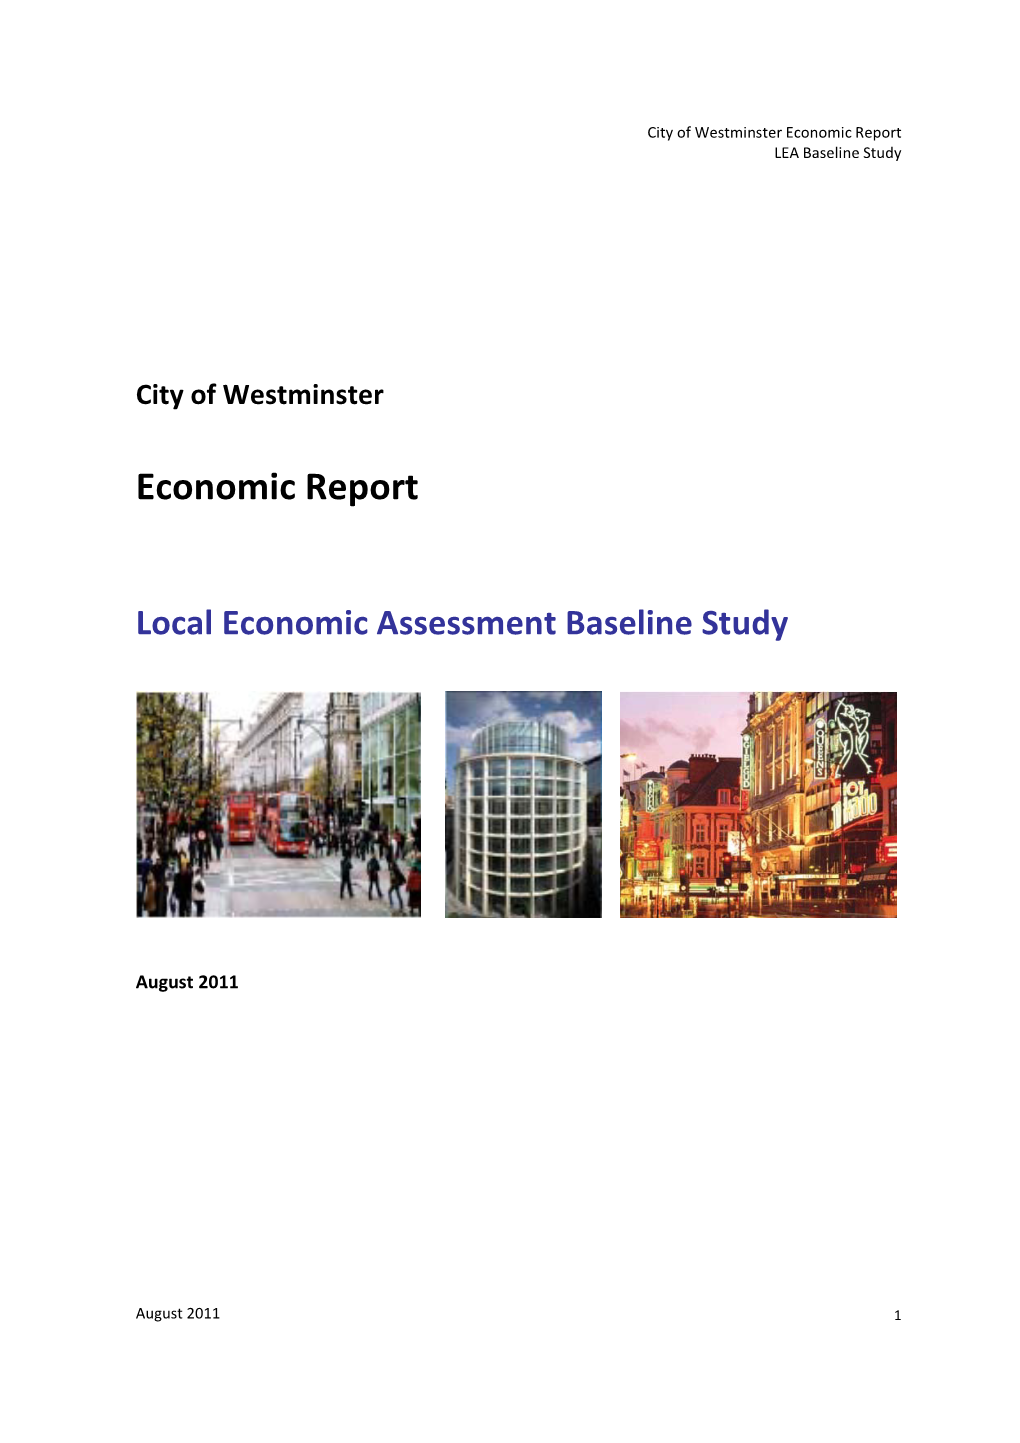 Economic Report LEA Baseline Study